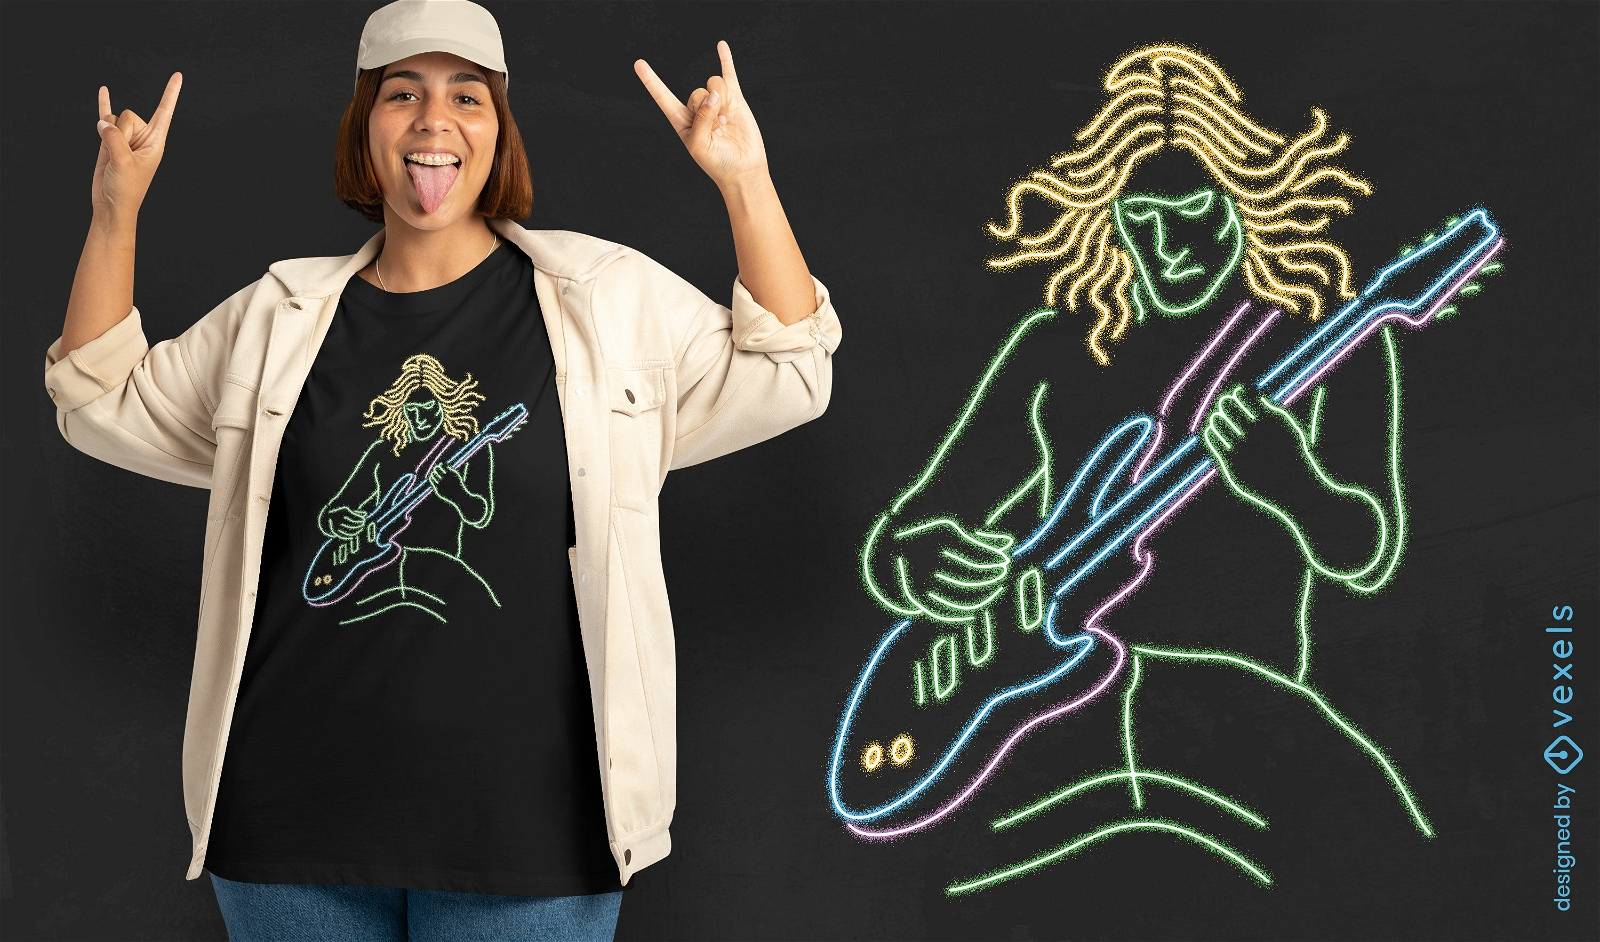 Neon rock guitarist t-shirt design